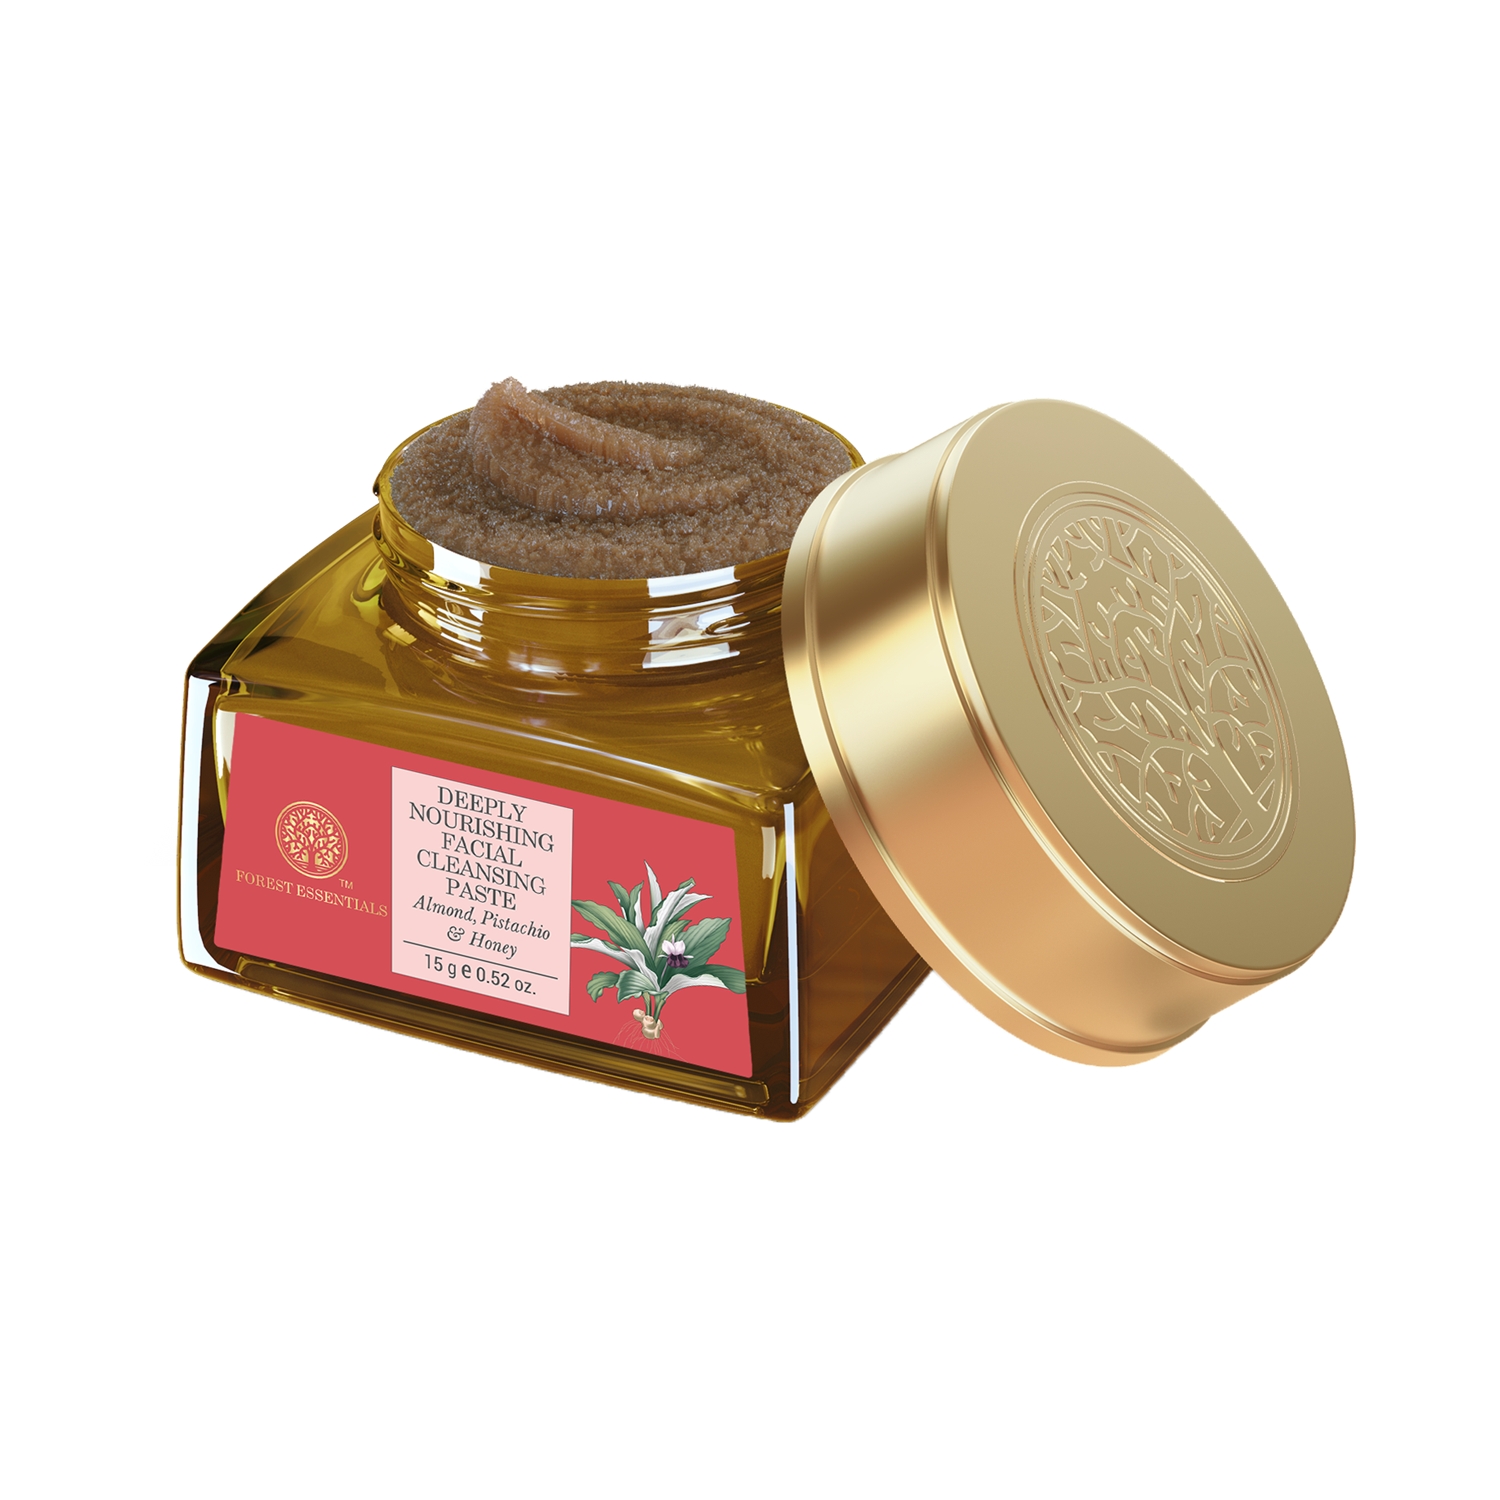 Forest Essentials | Forest Essentials Almond Pistachio & Honey Deeply Nourishing Facial Cleansing Paste (15g)